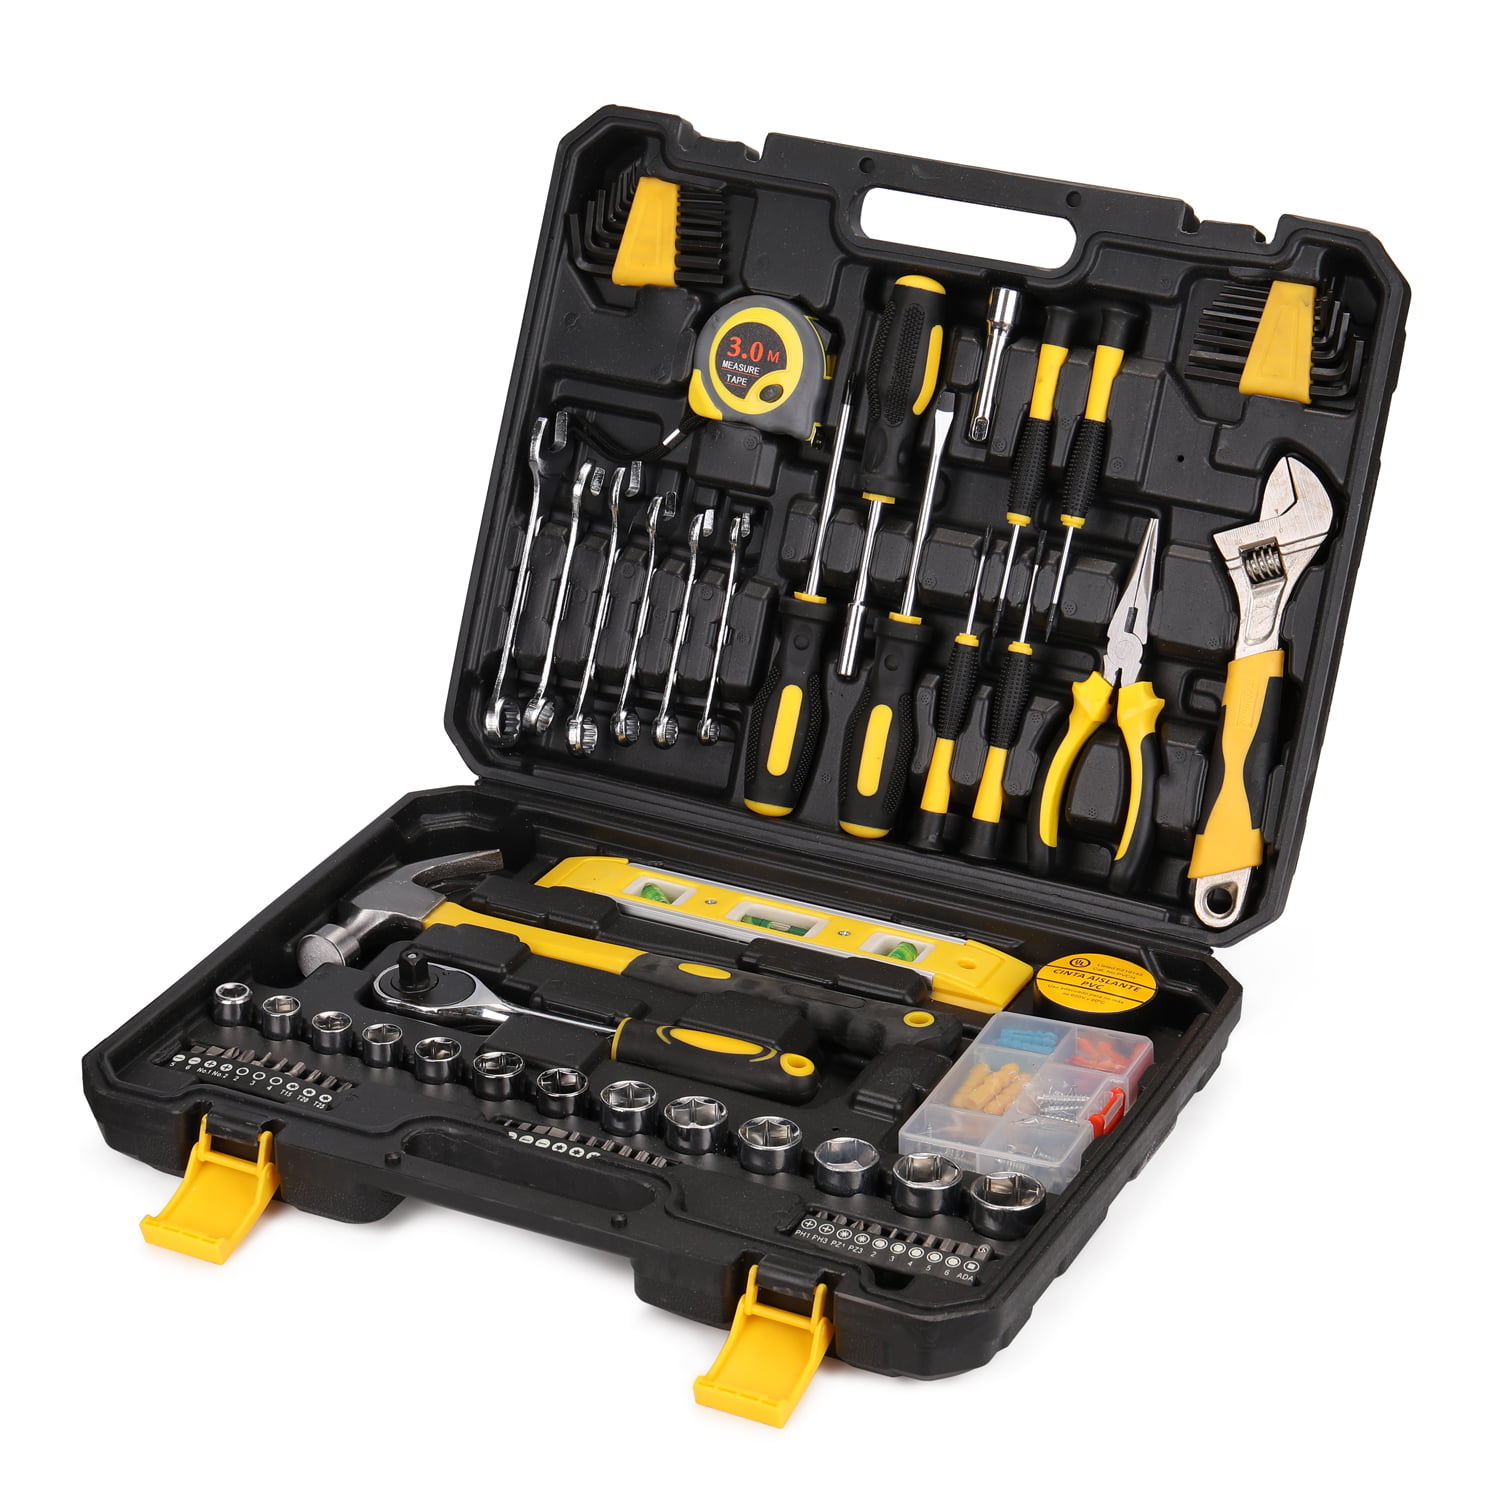 YEXINTMF Tool Set Household Hardware Hand Tools Combination Auto Repairing Kit Tool Box 